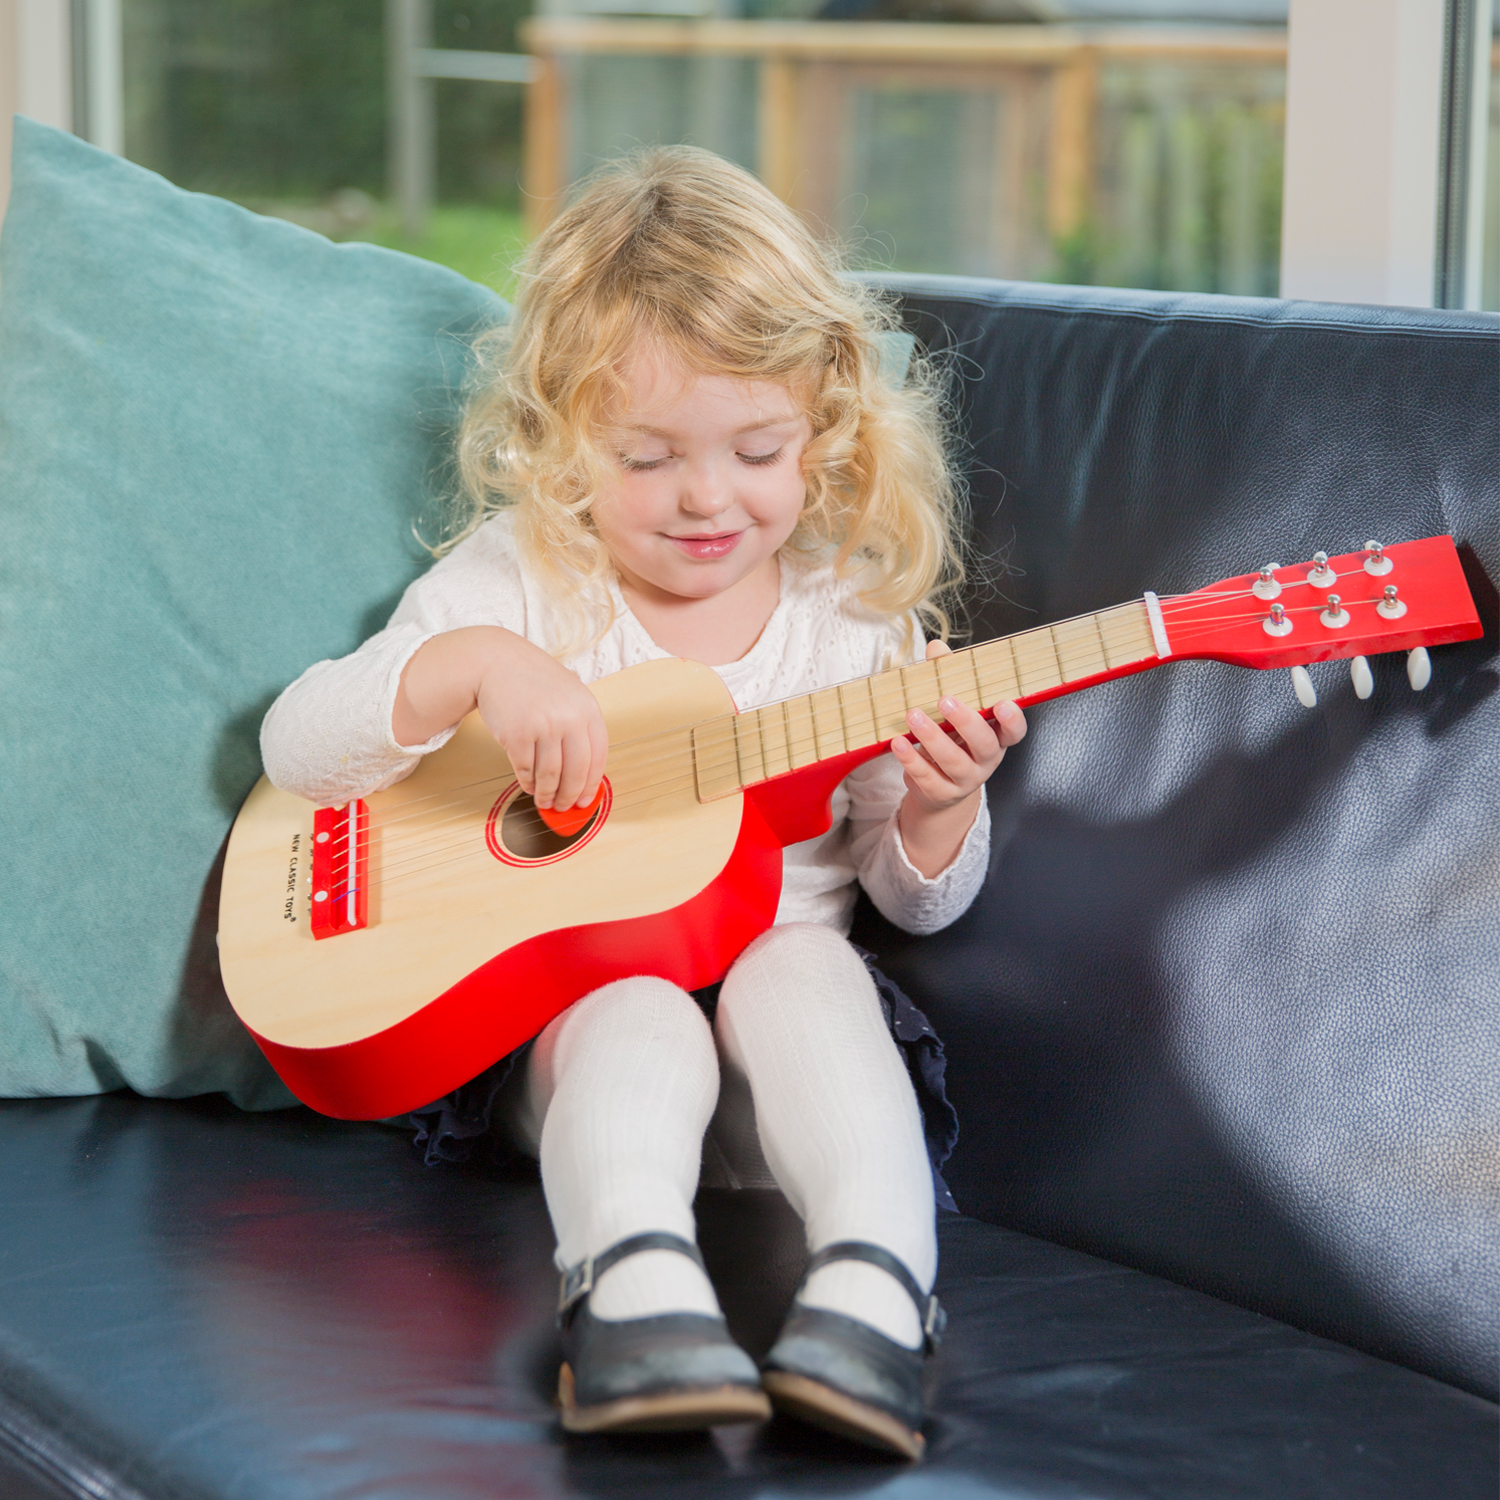 New Classic Toys Guitare enfant bois rose